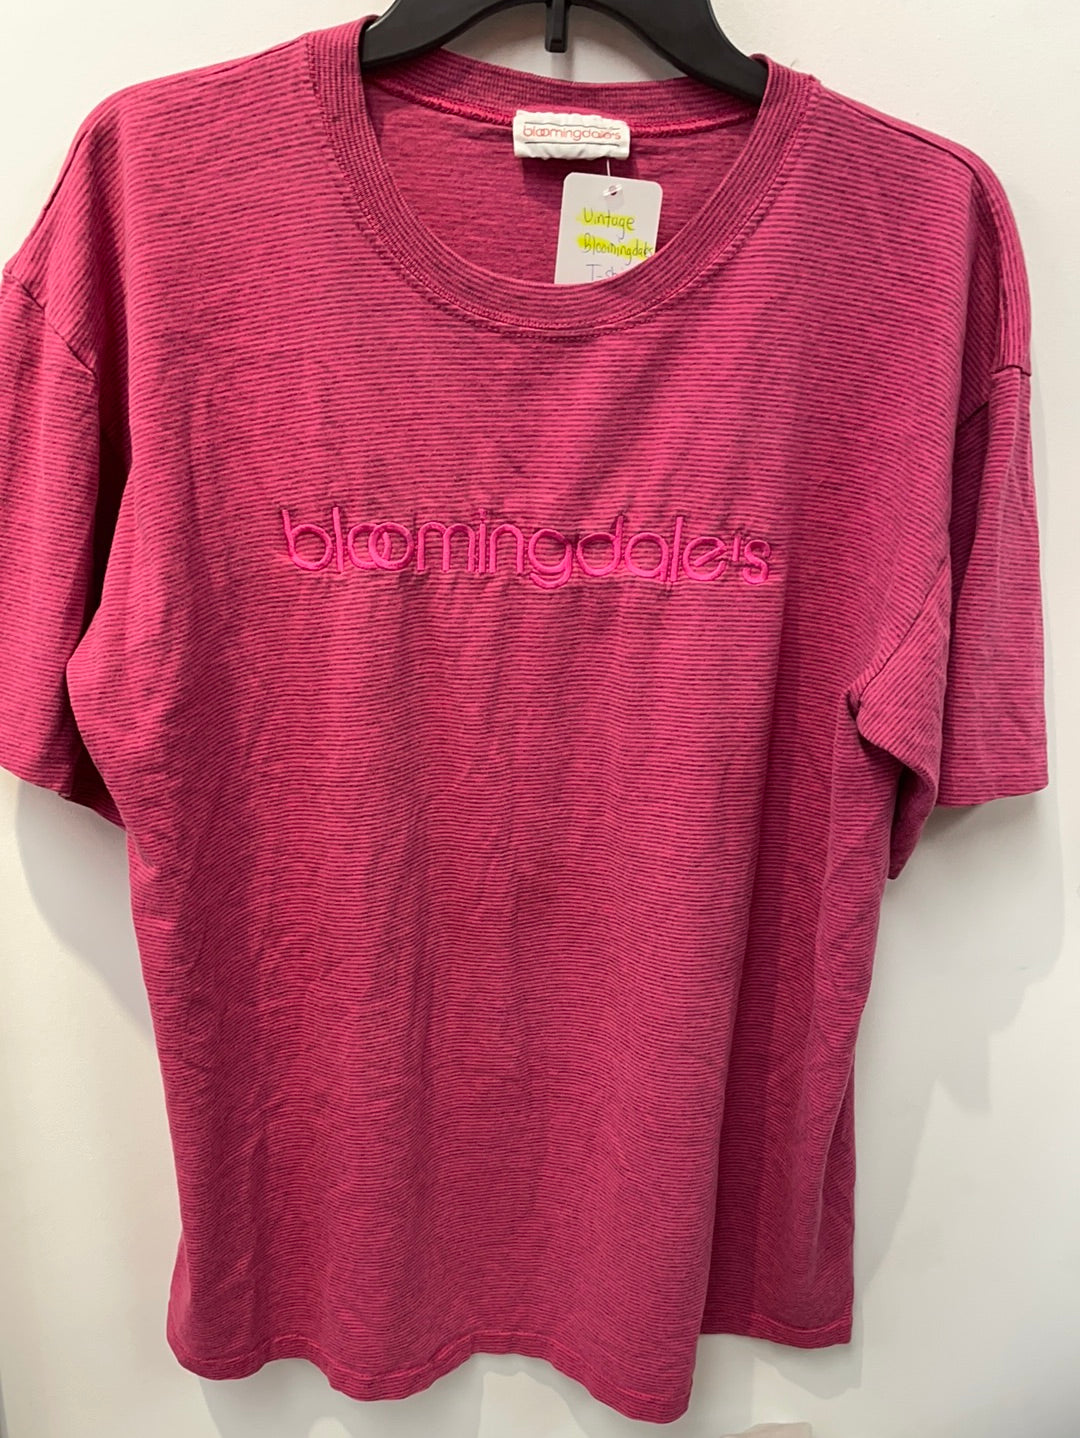 Vintage Pink Bloomingdales t-shirt size XL